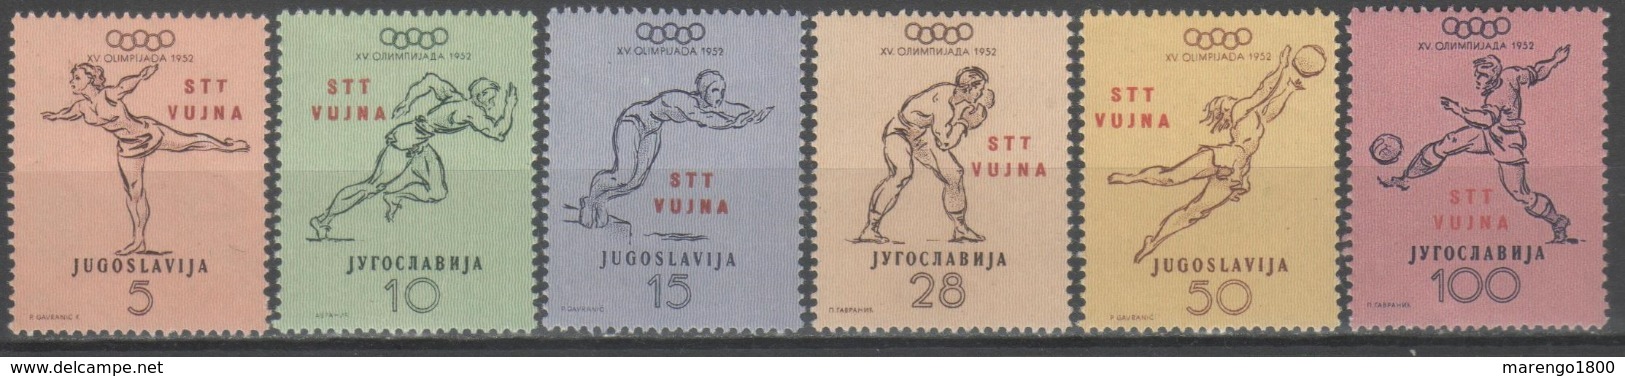 Stt-Vuja 1952 - Olimpiadi Helsinki *             (g6002) - Nuevos